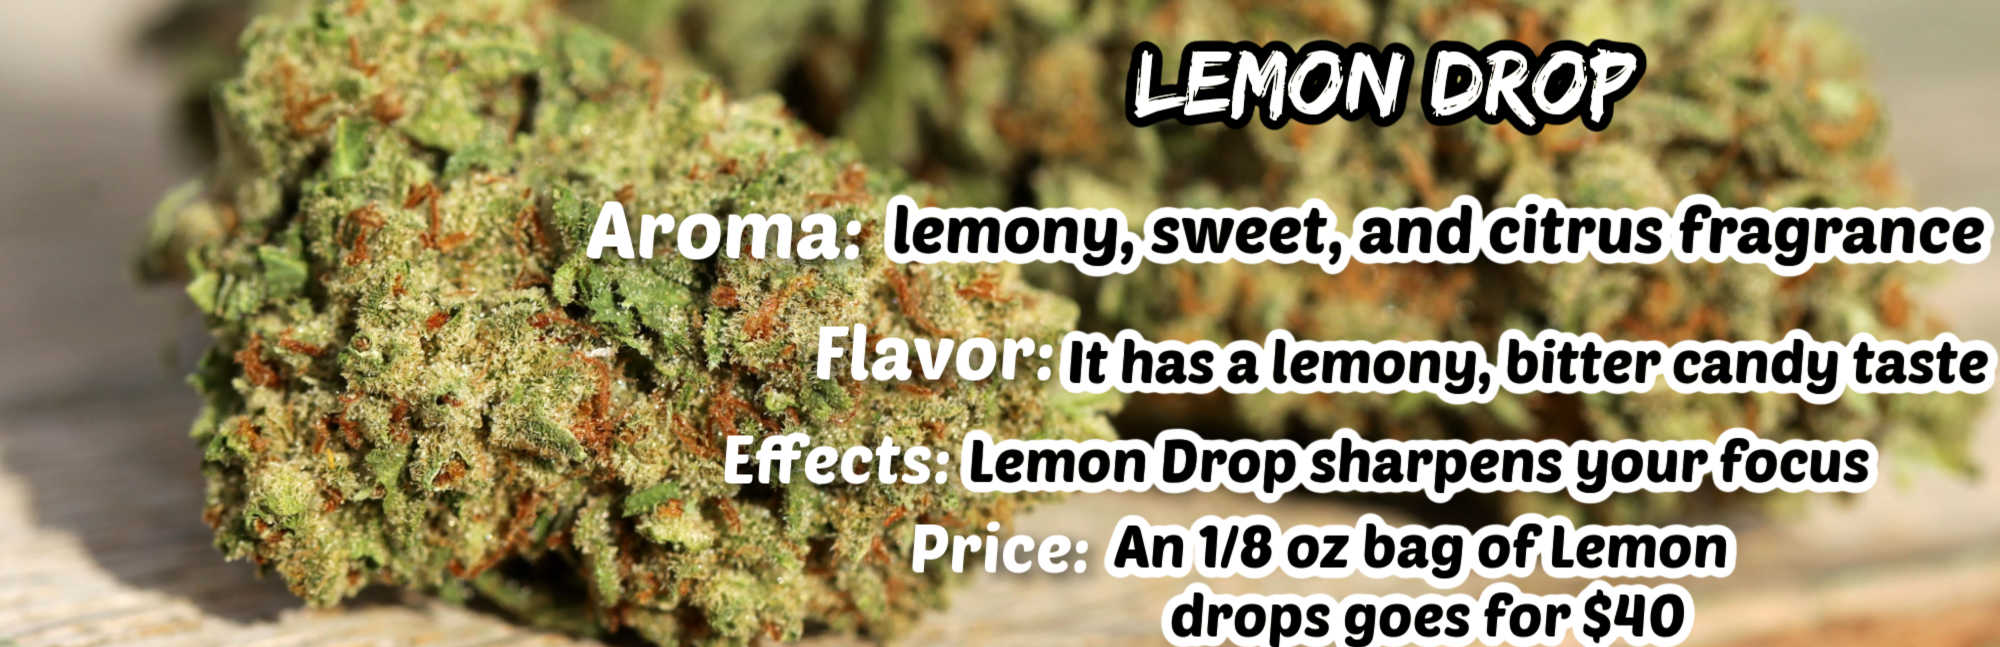 image of lemon drop hemp strain